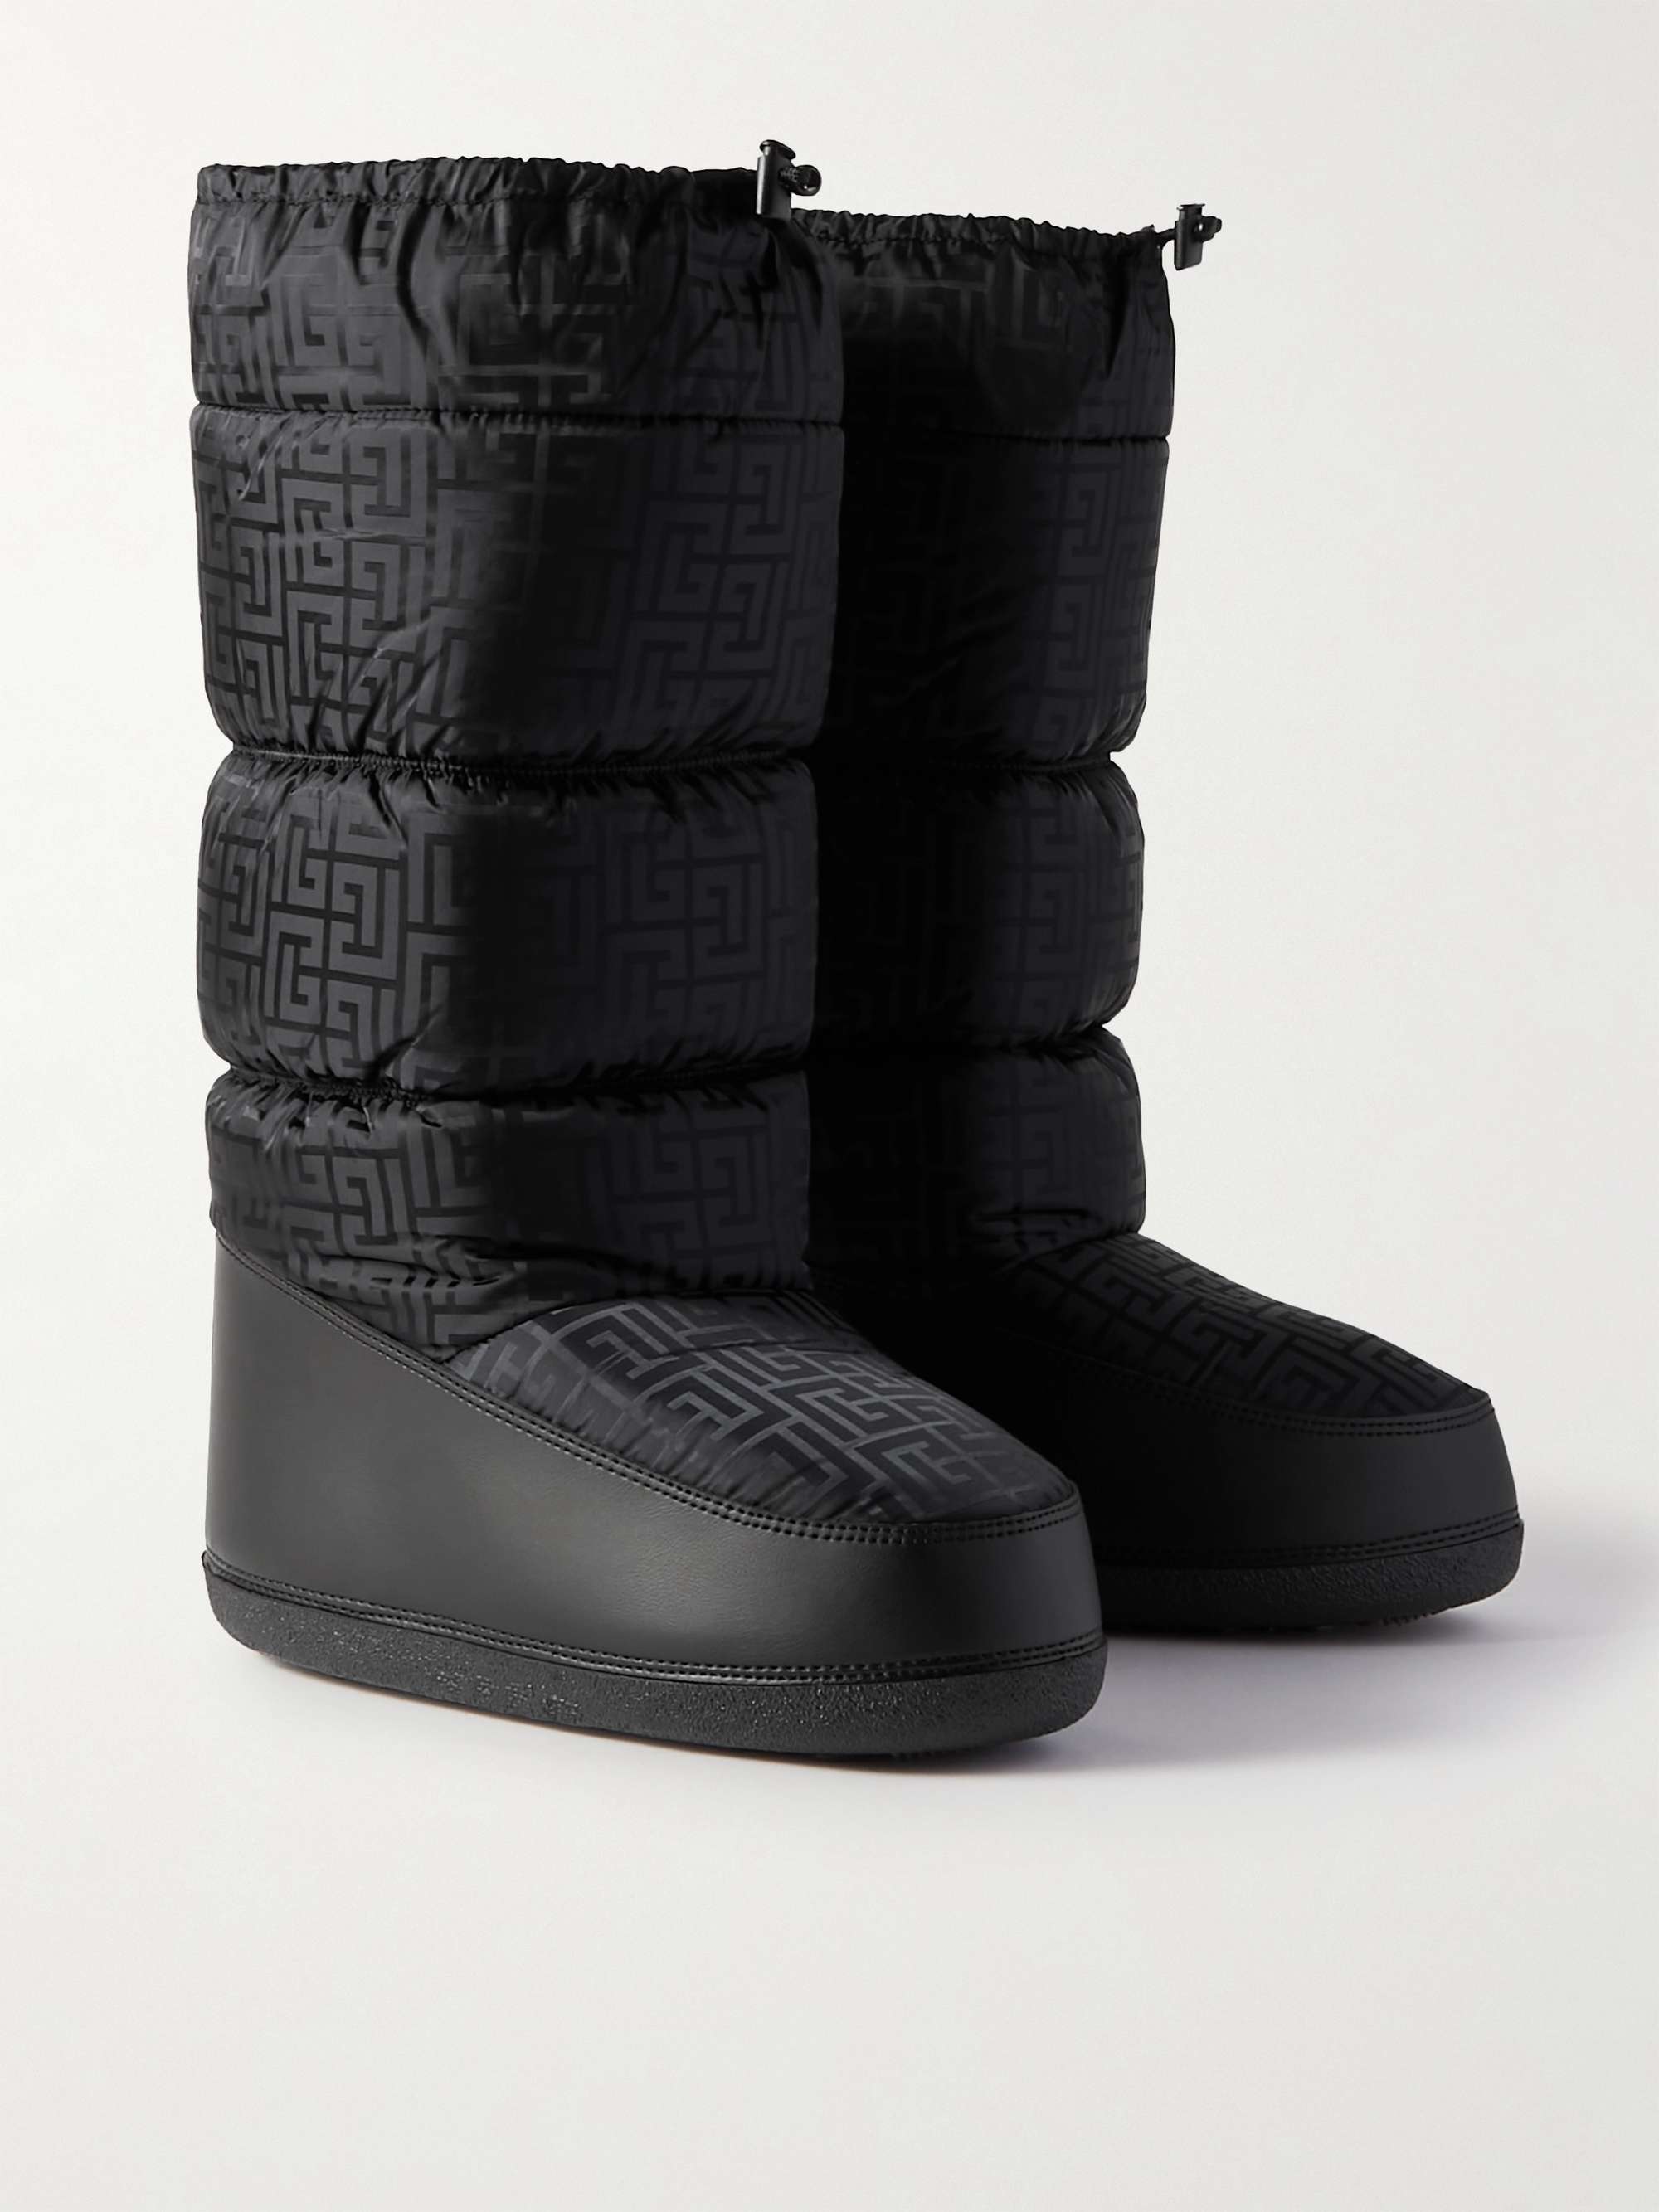 BALMAIN + Rossignol Leather-Trimmed Logo-Jacquard Nylon Snow Boots